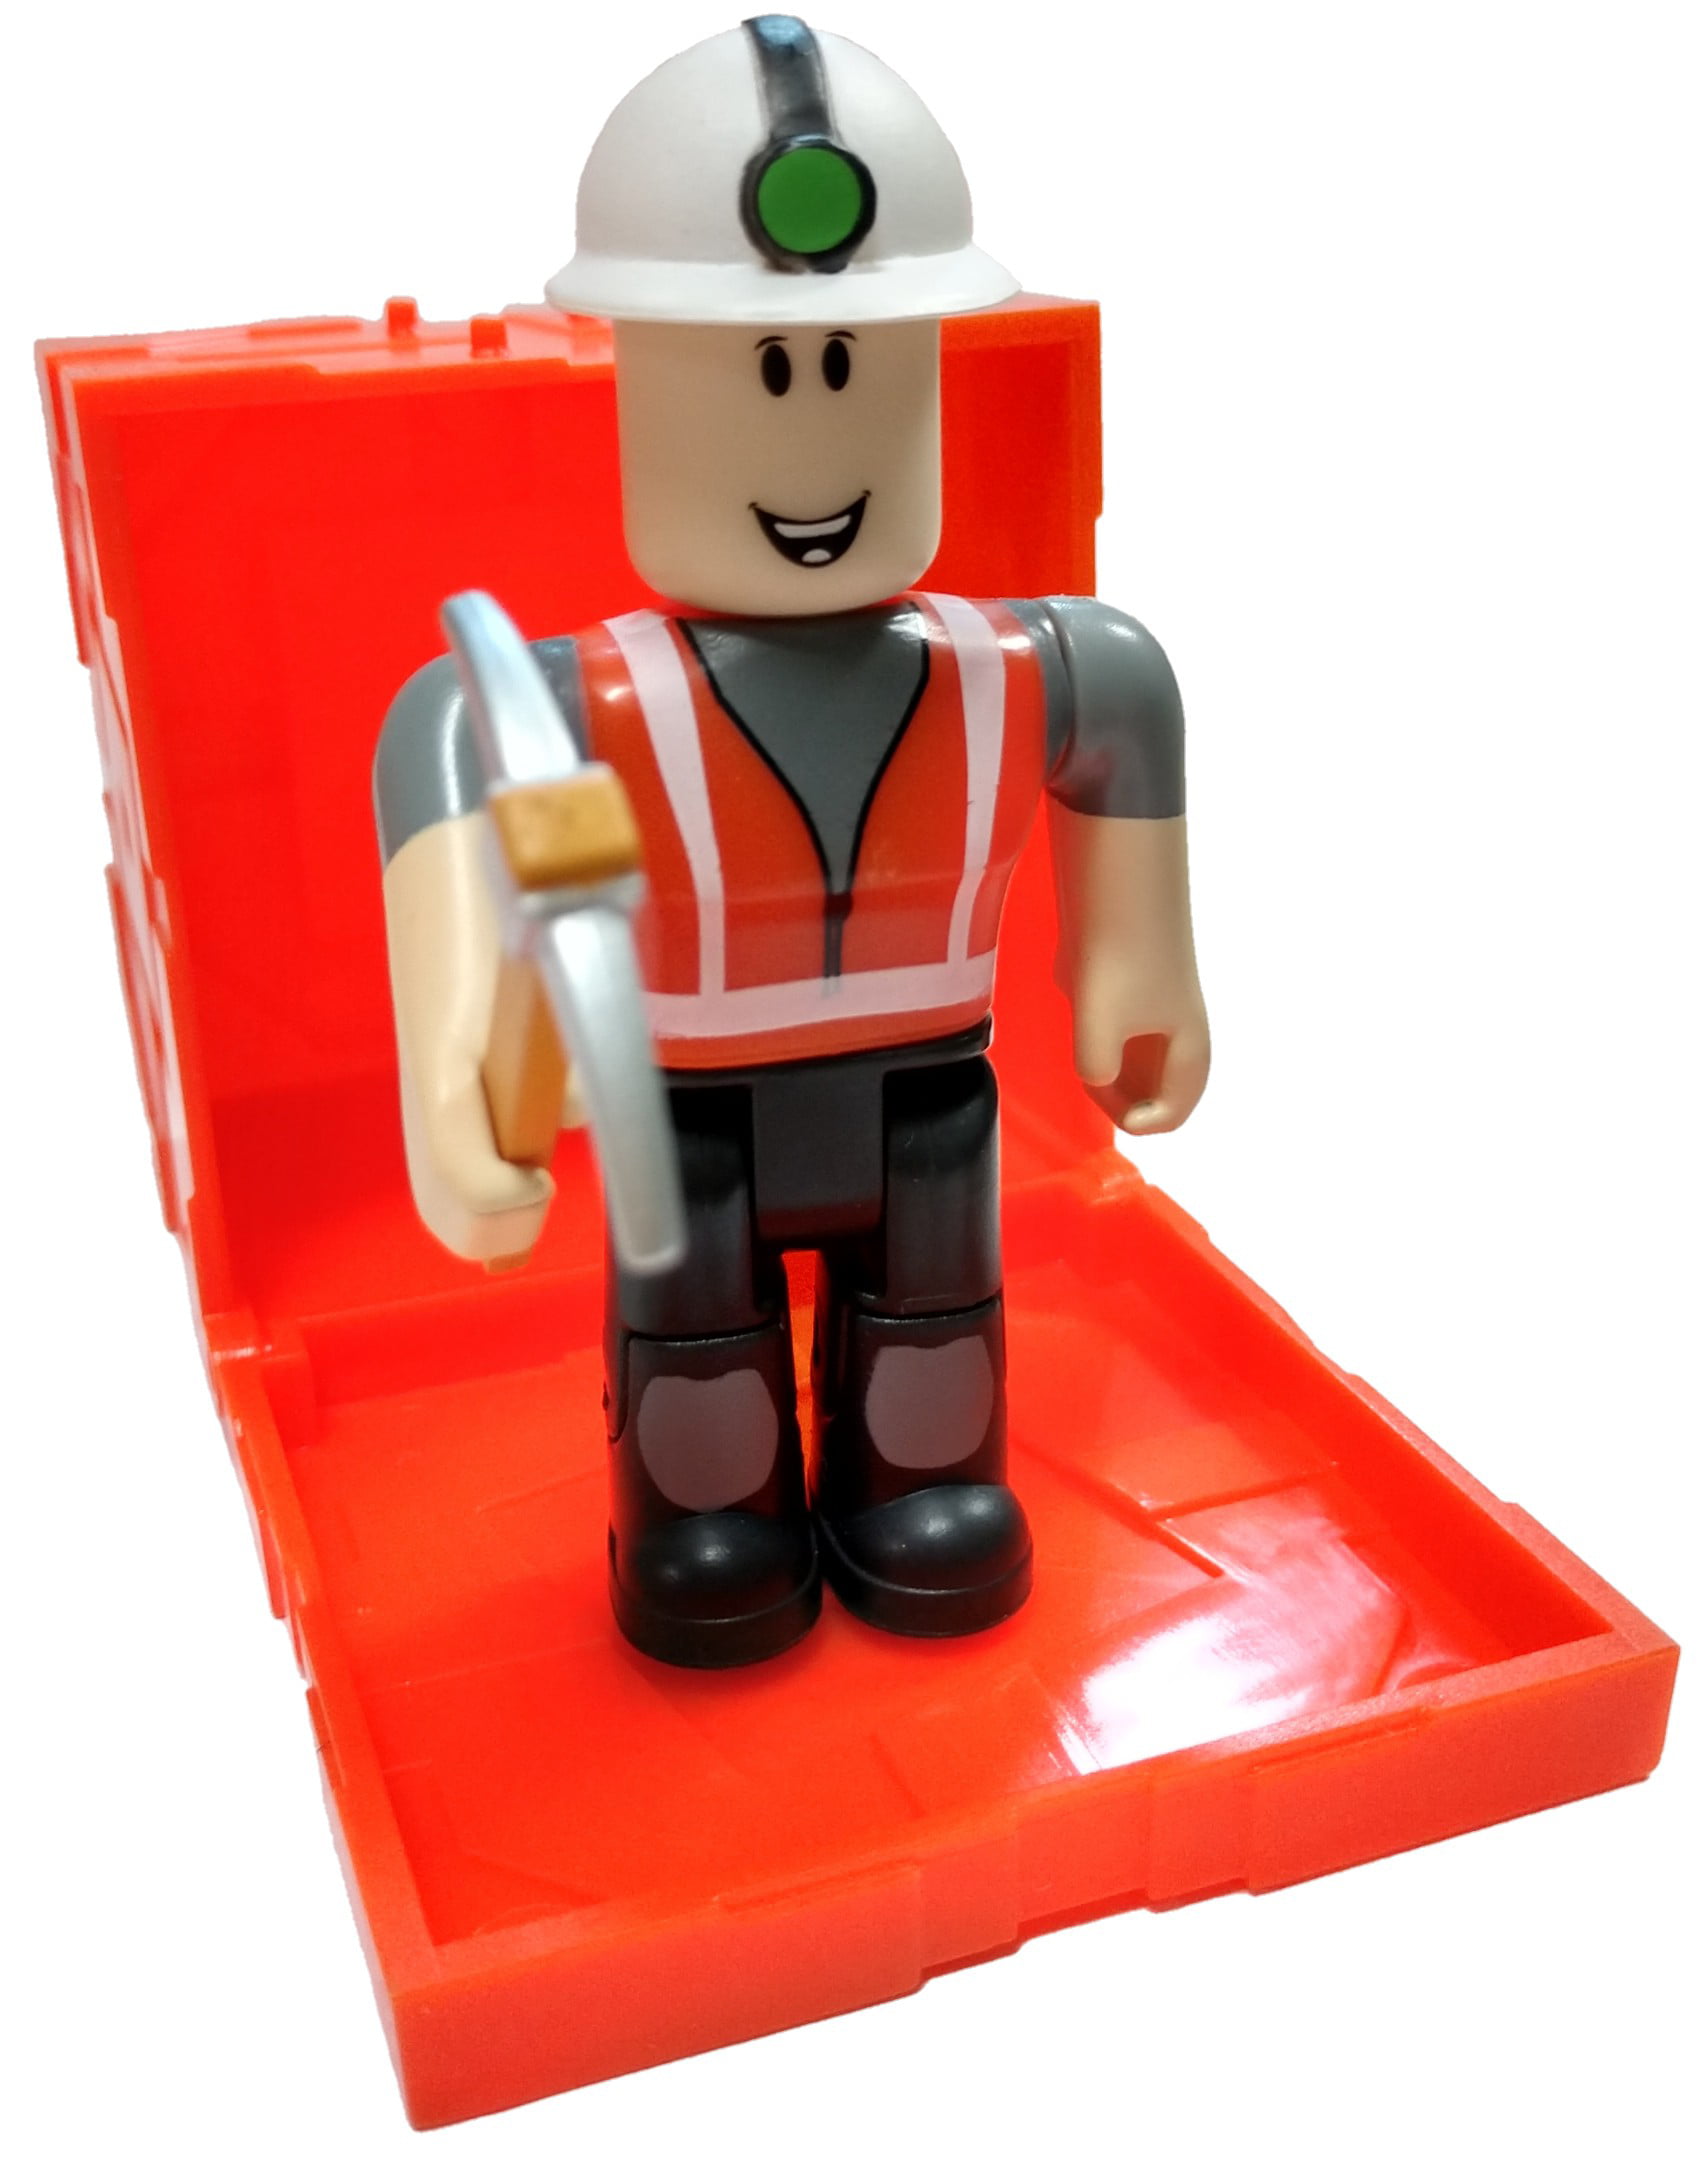 Roblox Series 6 Mining Simulator Miner Mike Mini Figure With Orange Cube And Online Code No Packaging Walmart Com Walmart Com